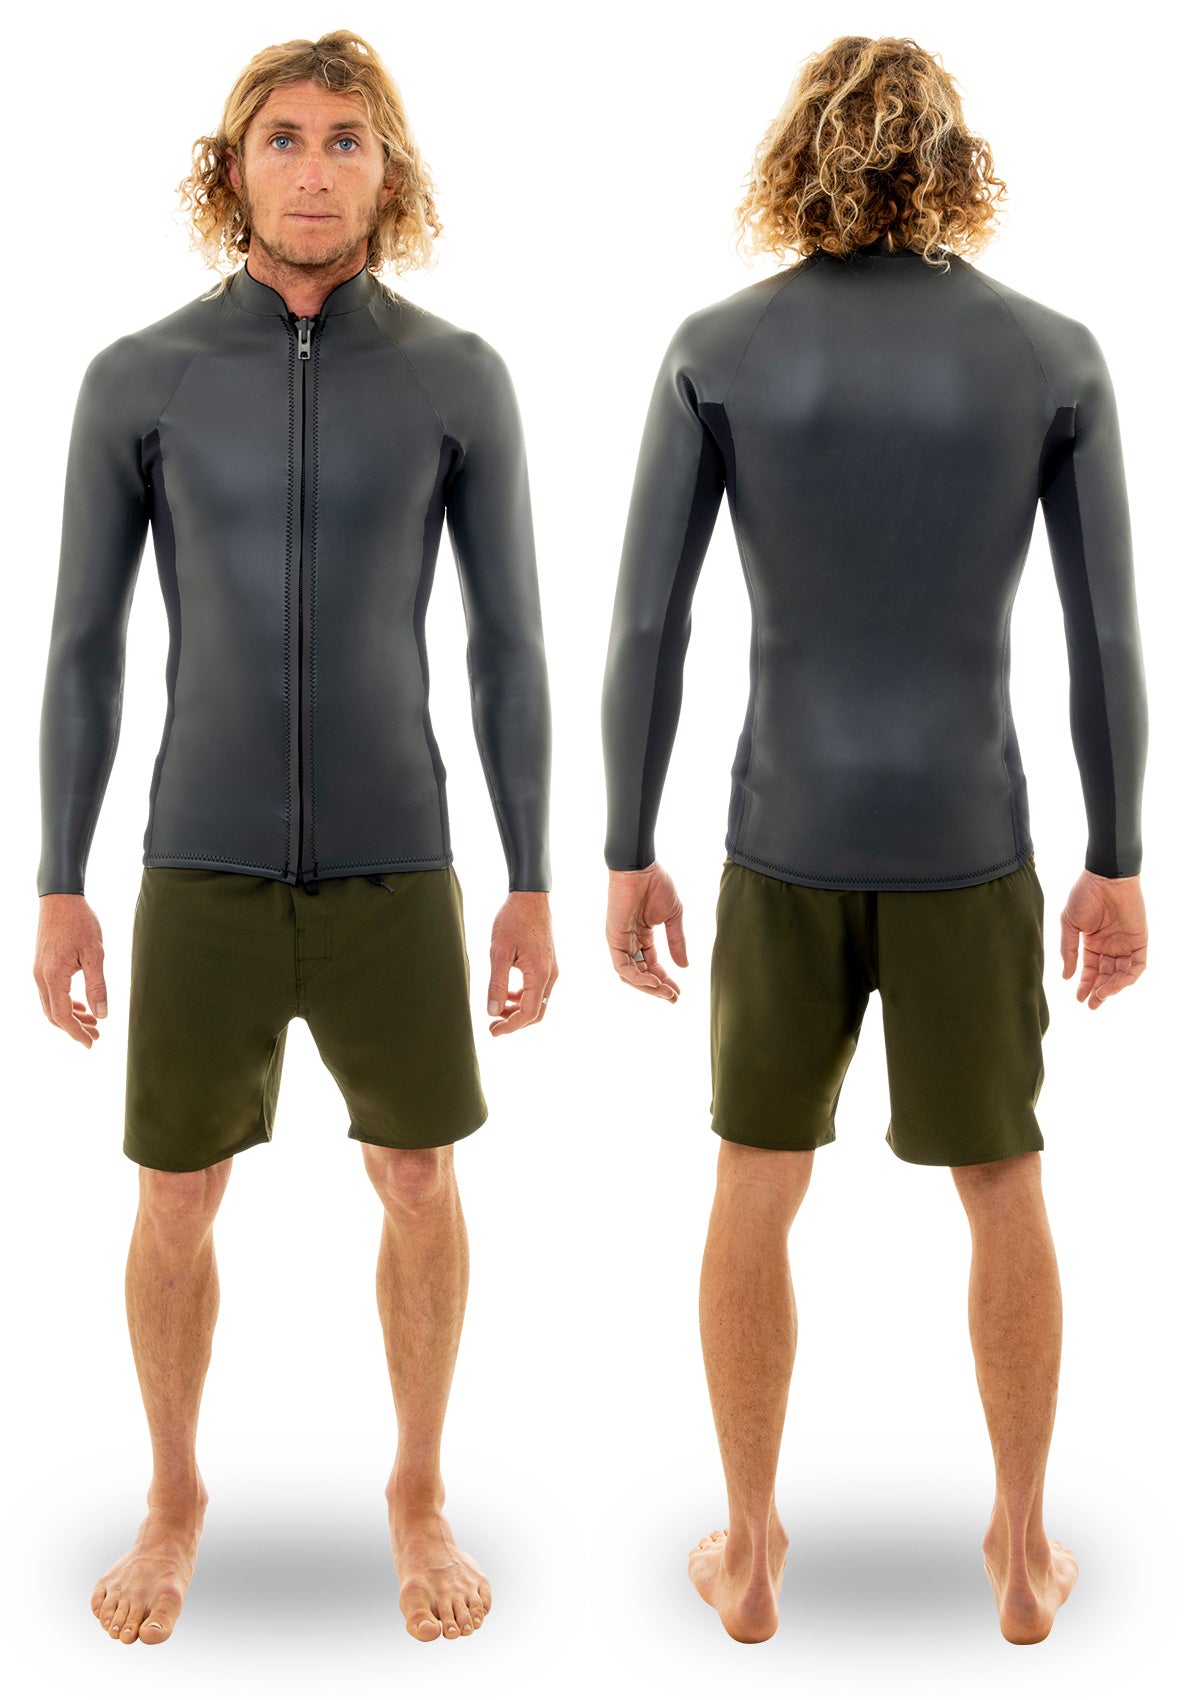 needessentials 2mm Smoothy Front Zip Jacket summer wetsuit non branded